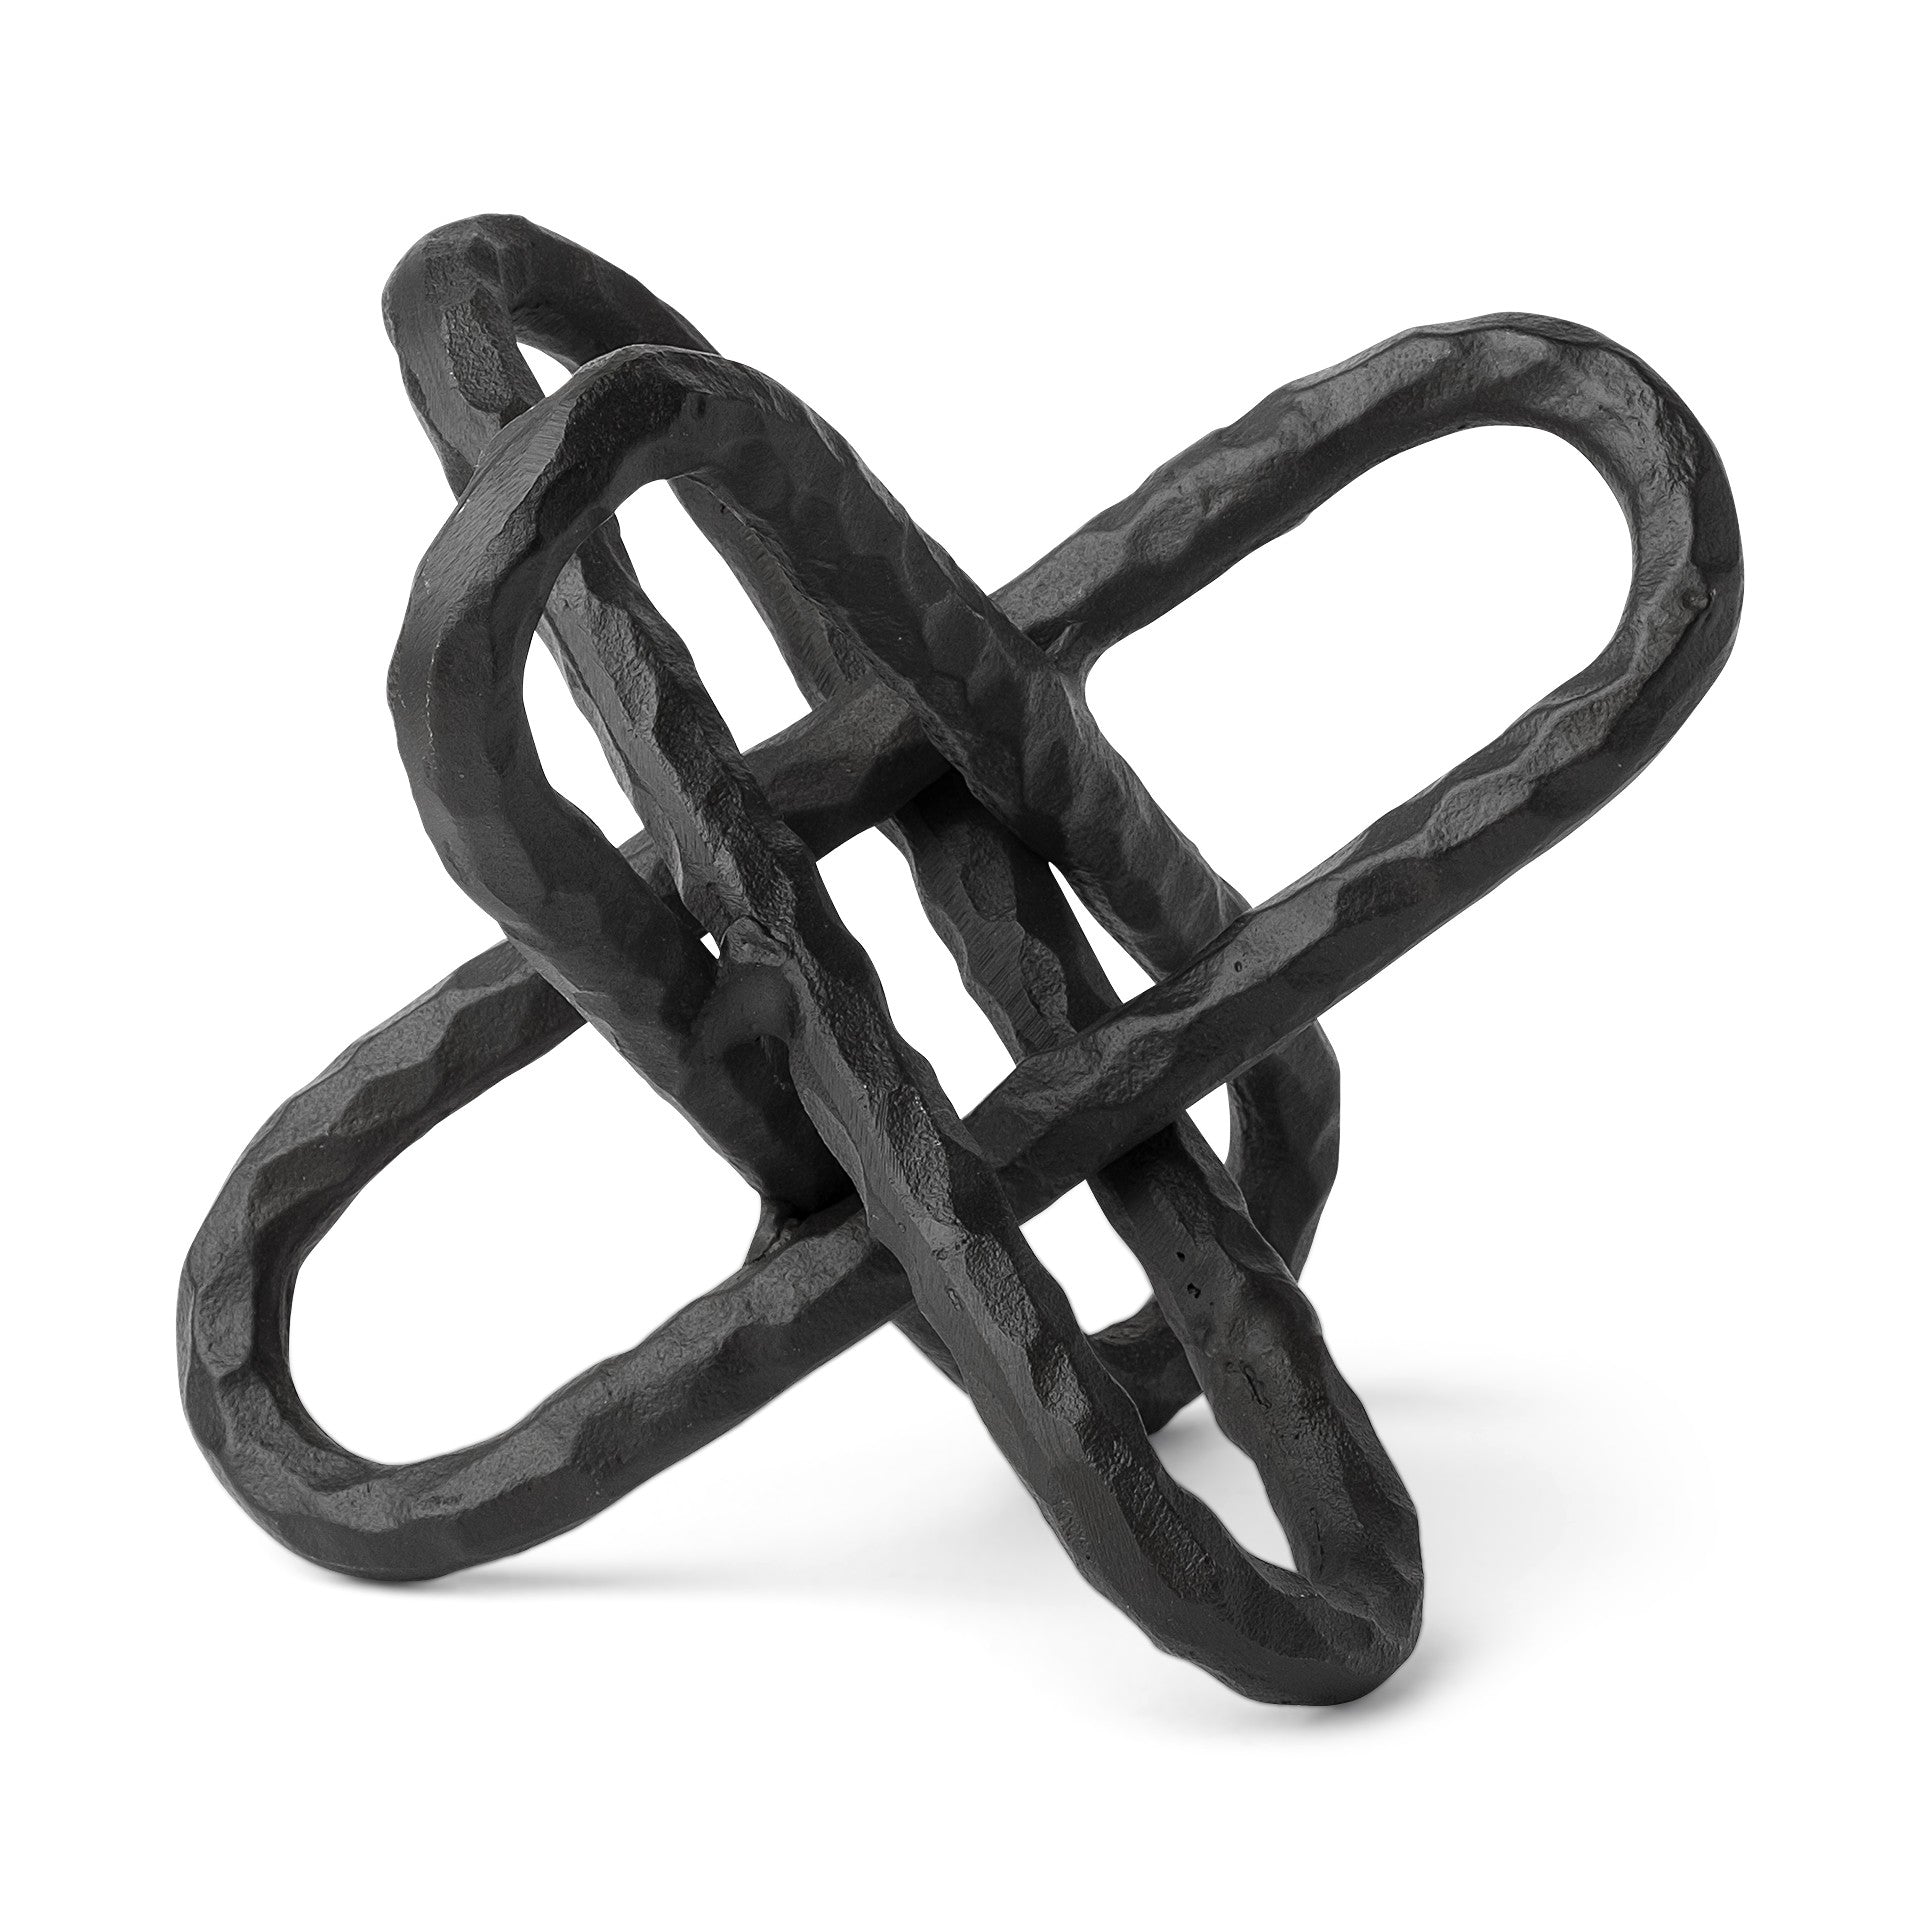 10" Black Metal Chain Link Tabletop Sculpture